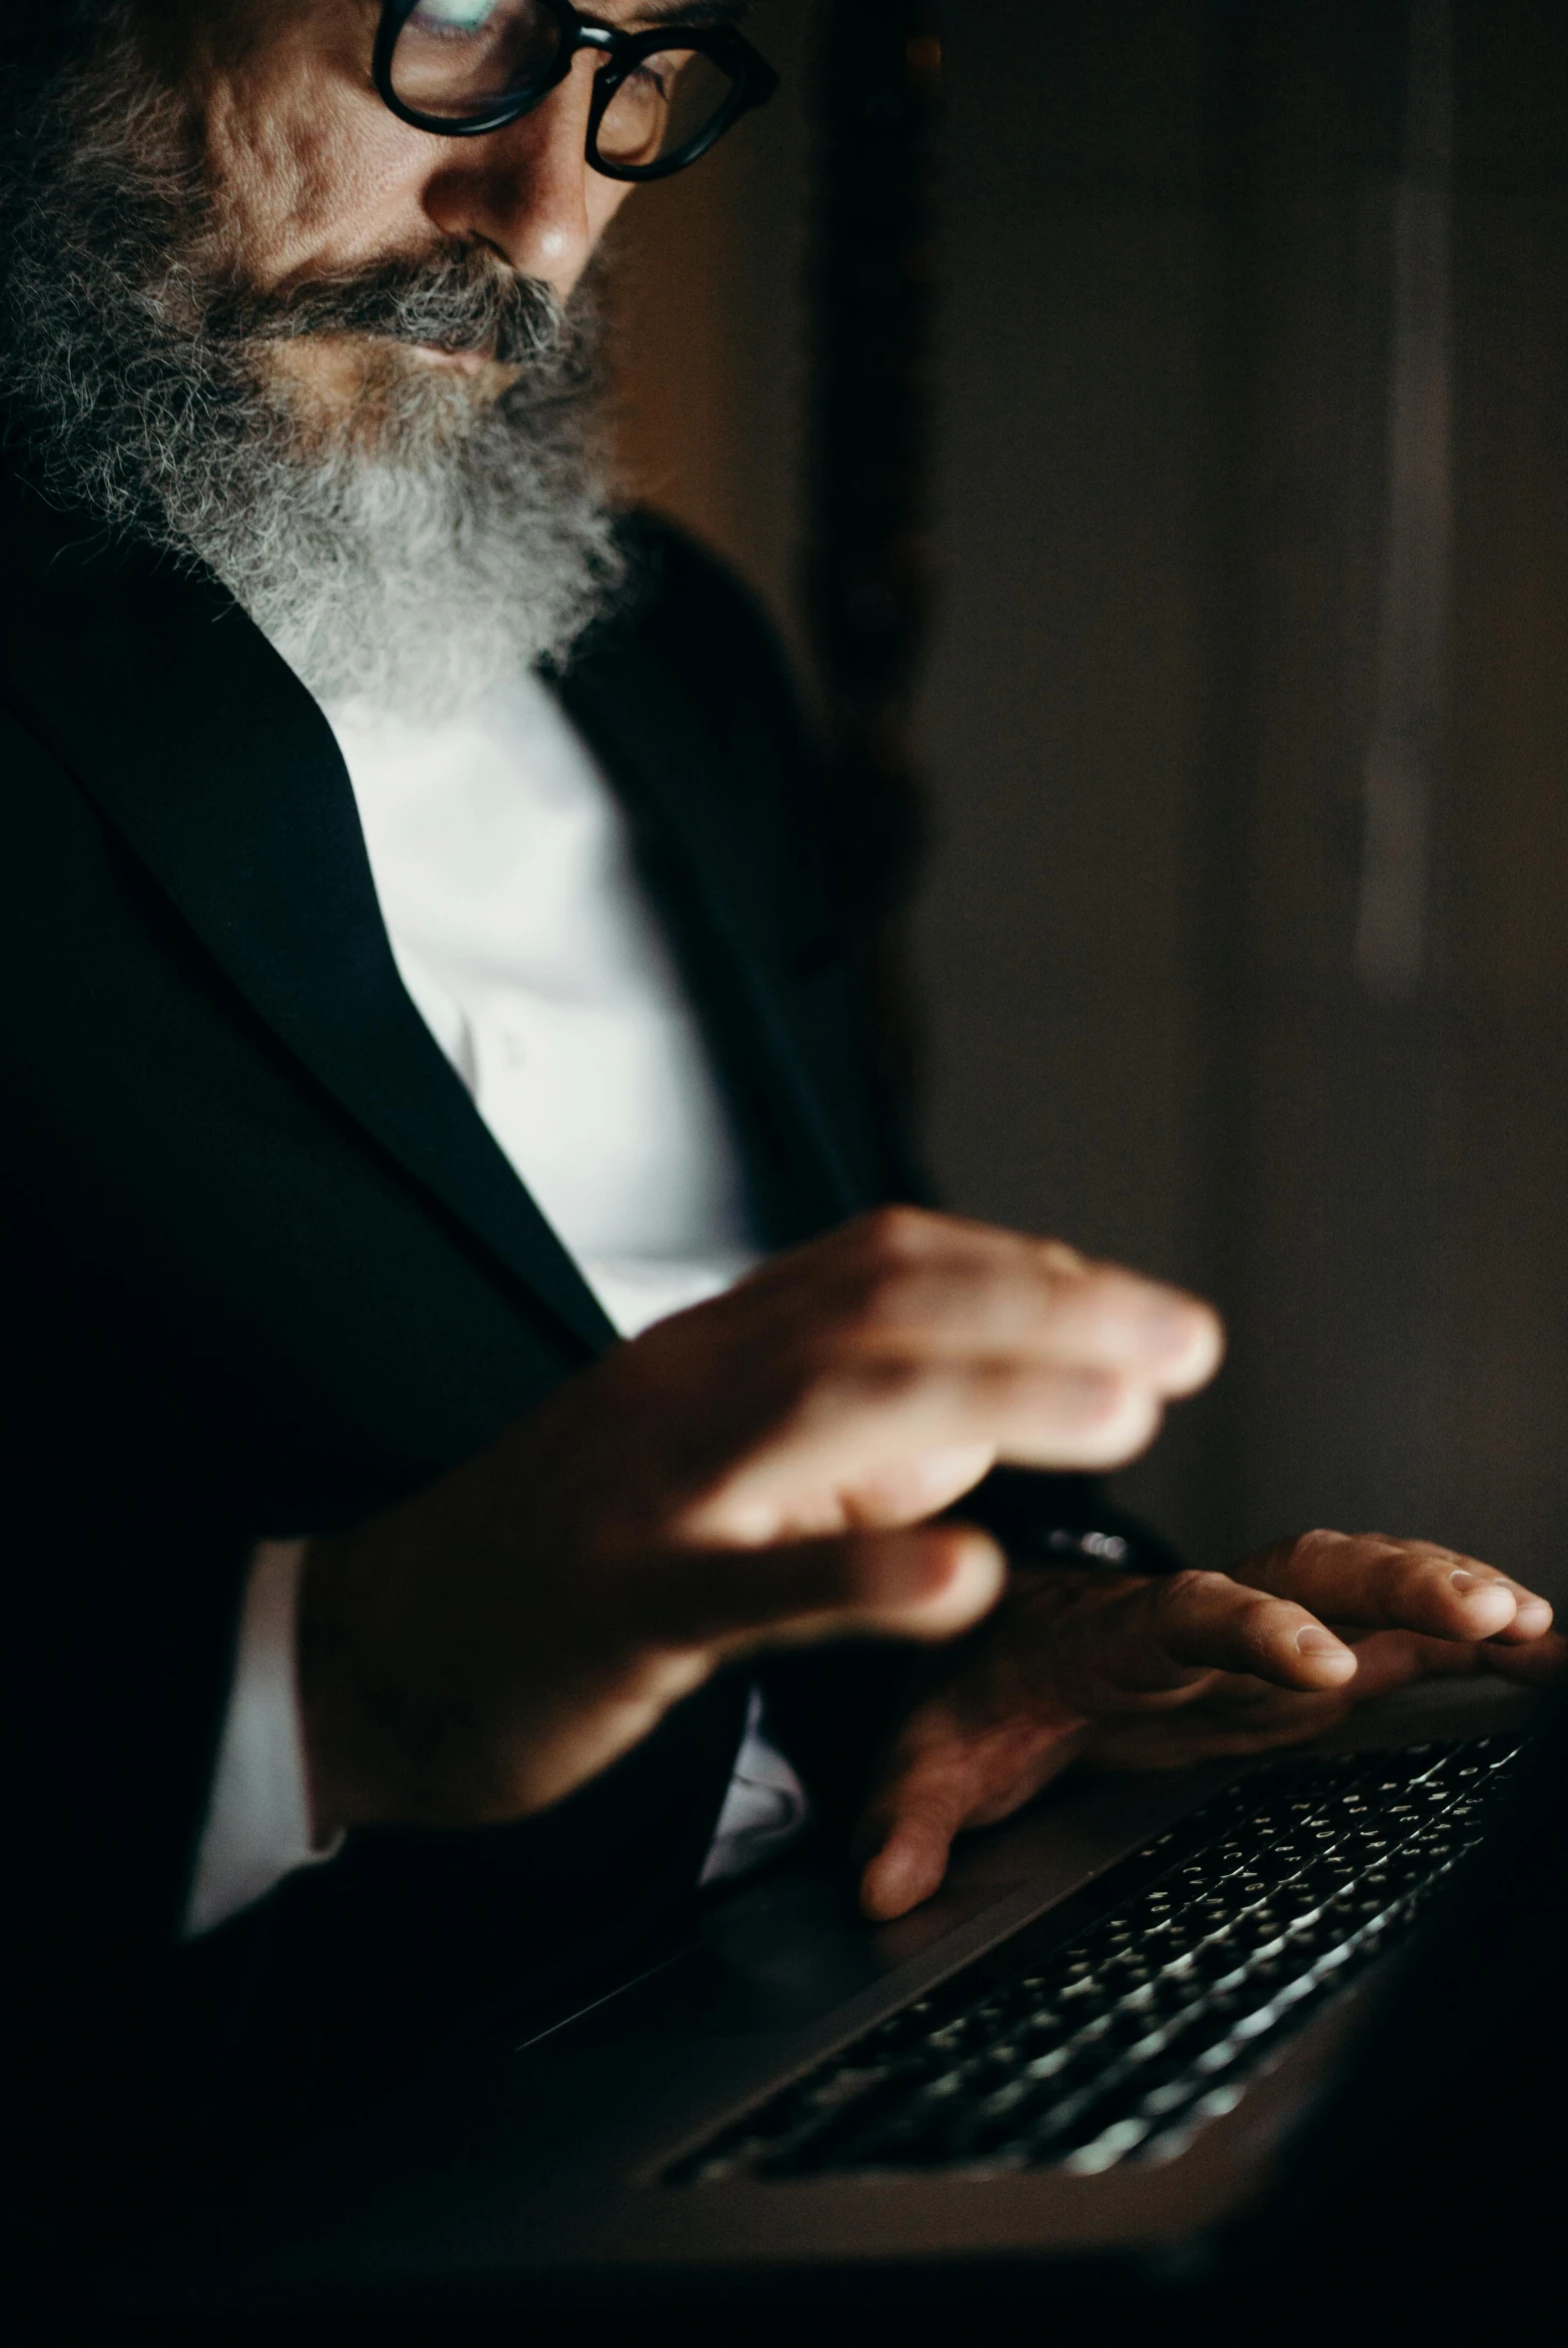 a man in tuxedo uses a laptop computer